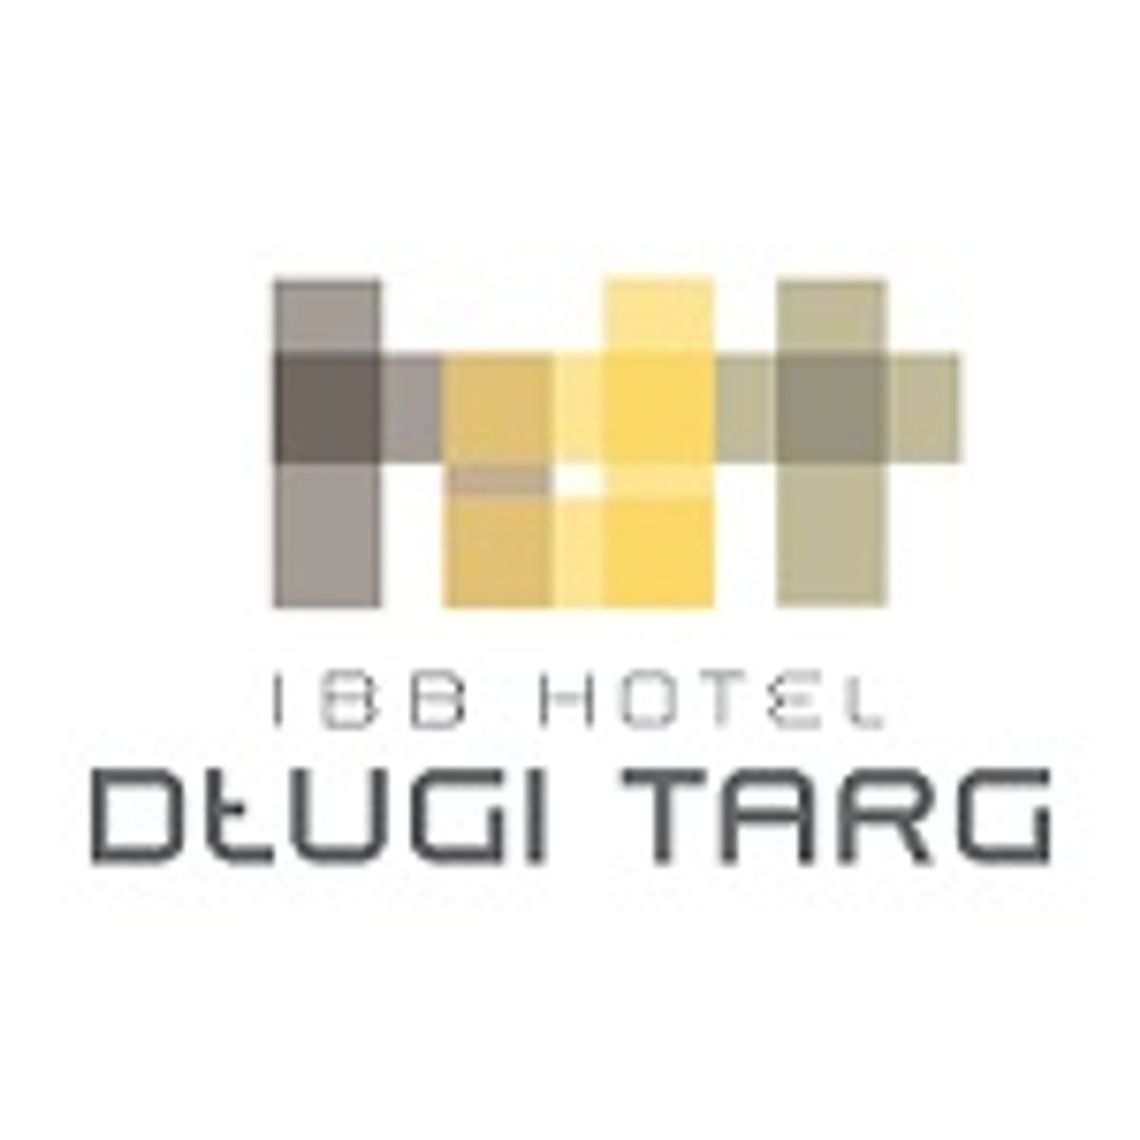 IBB Hotel Długi Targ